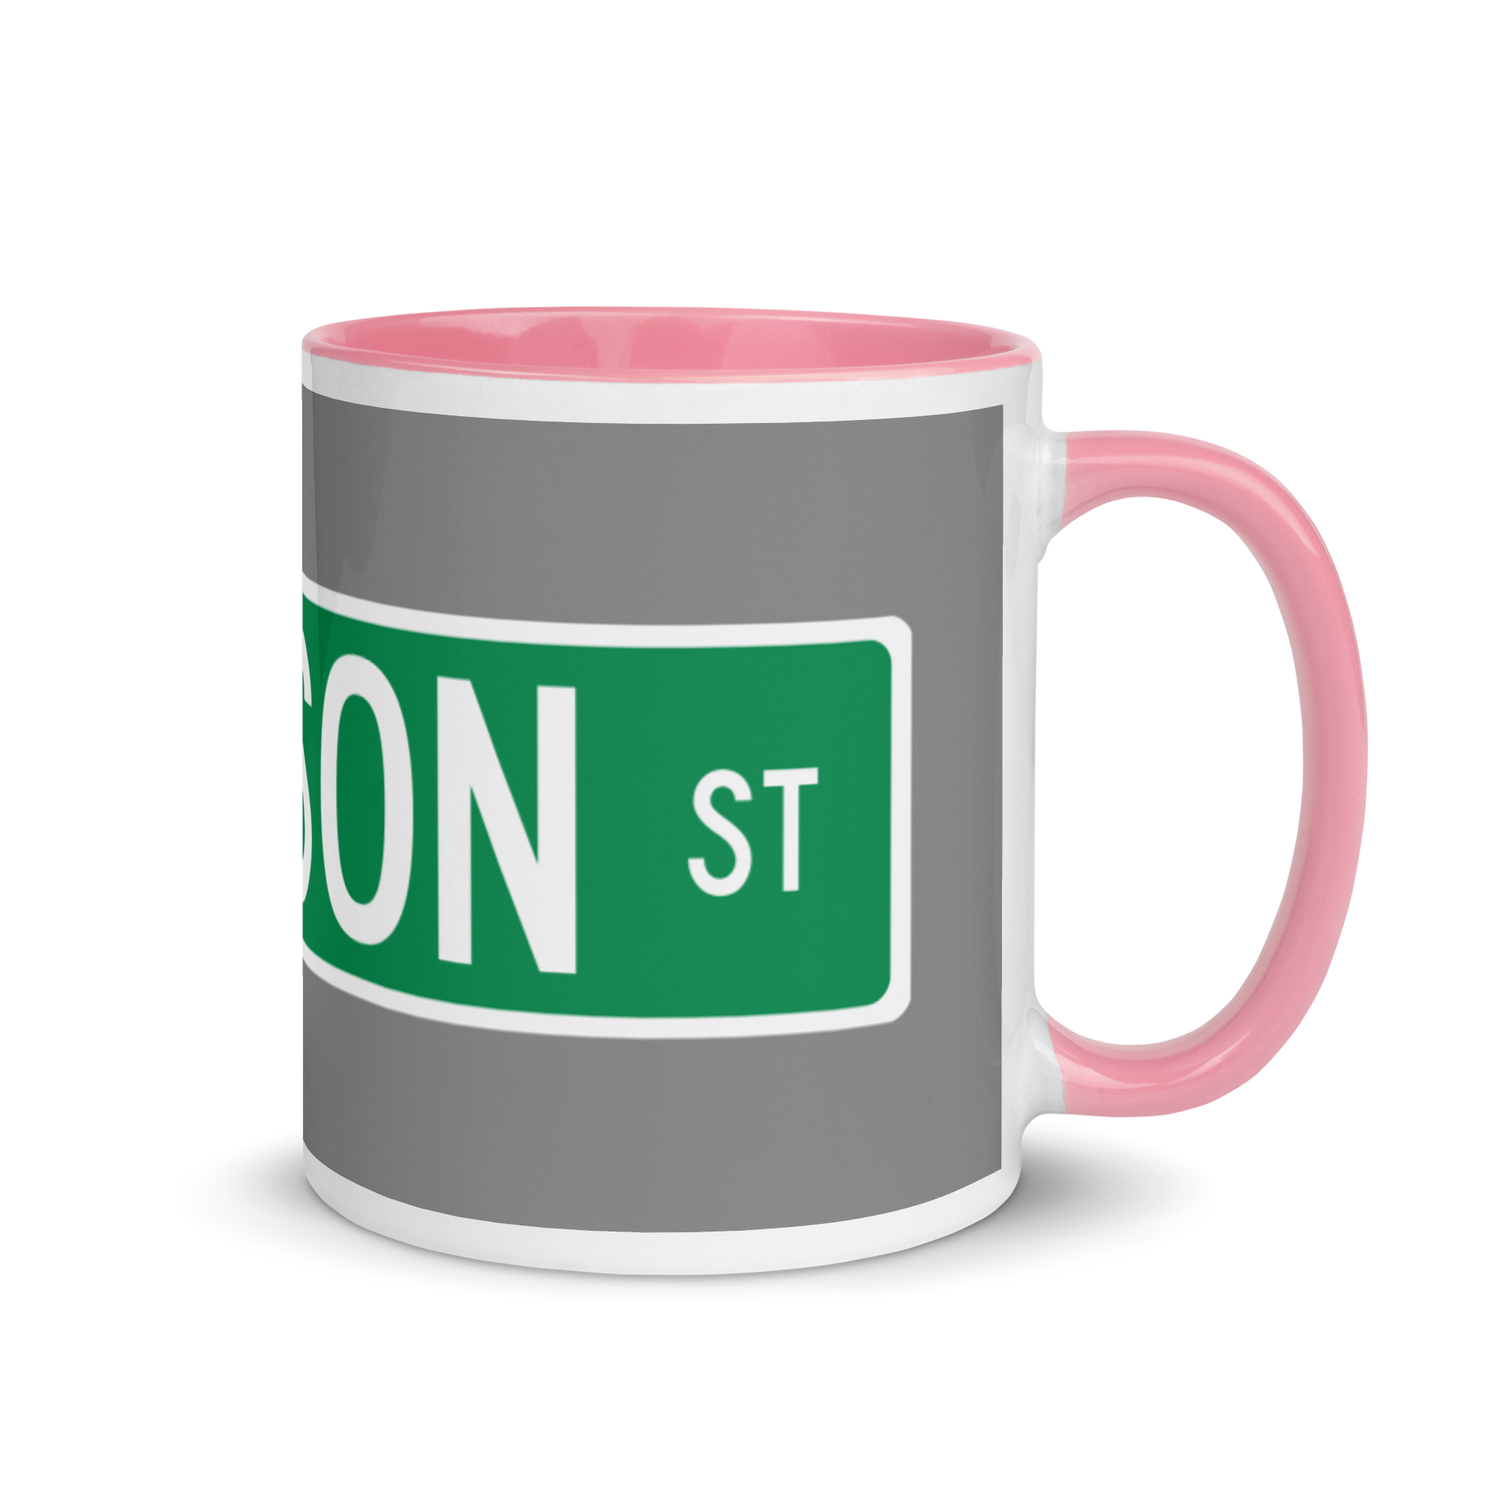 Dickson Street Sign Ceramic Mug